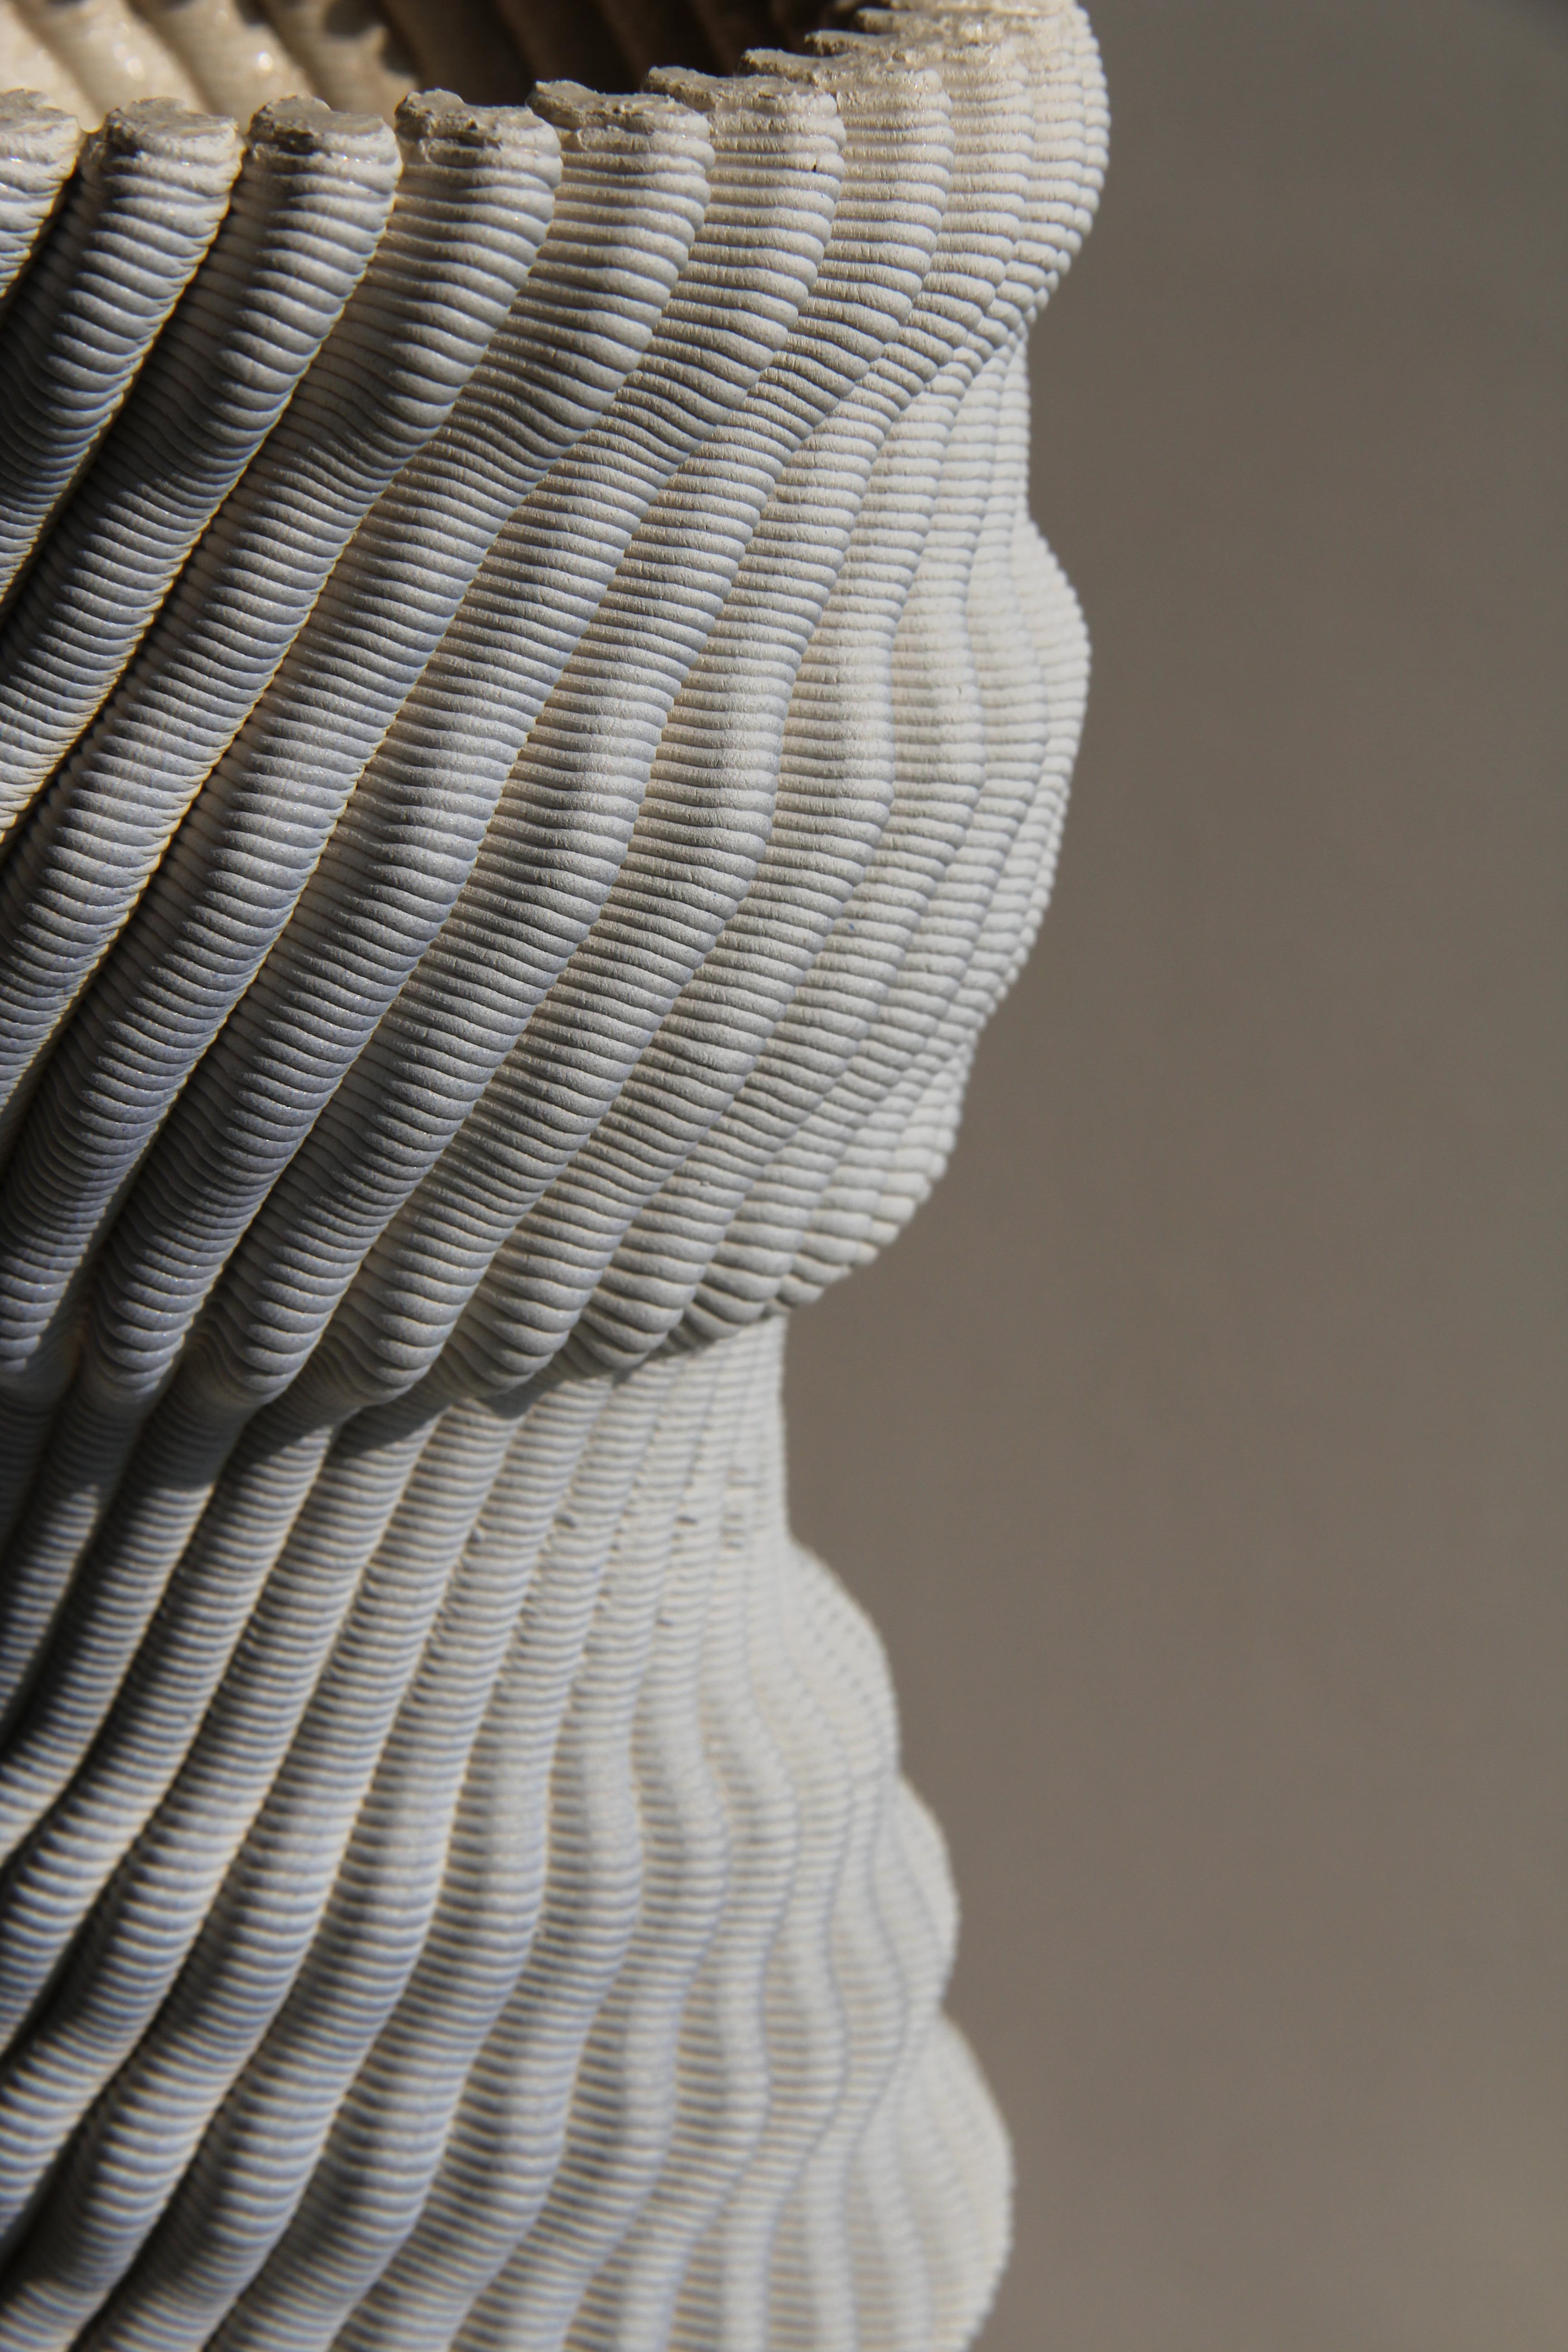 Gradient Blue 3D Printed Ceramic Tecla Vase Italy Contemporary 21st Century For Sale 1